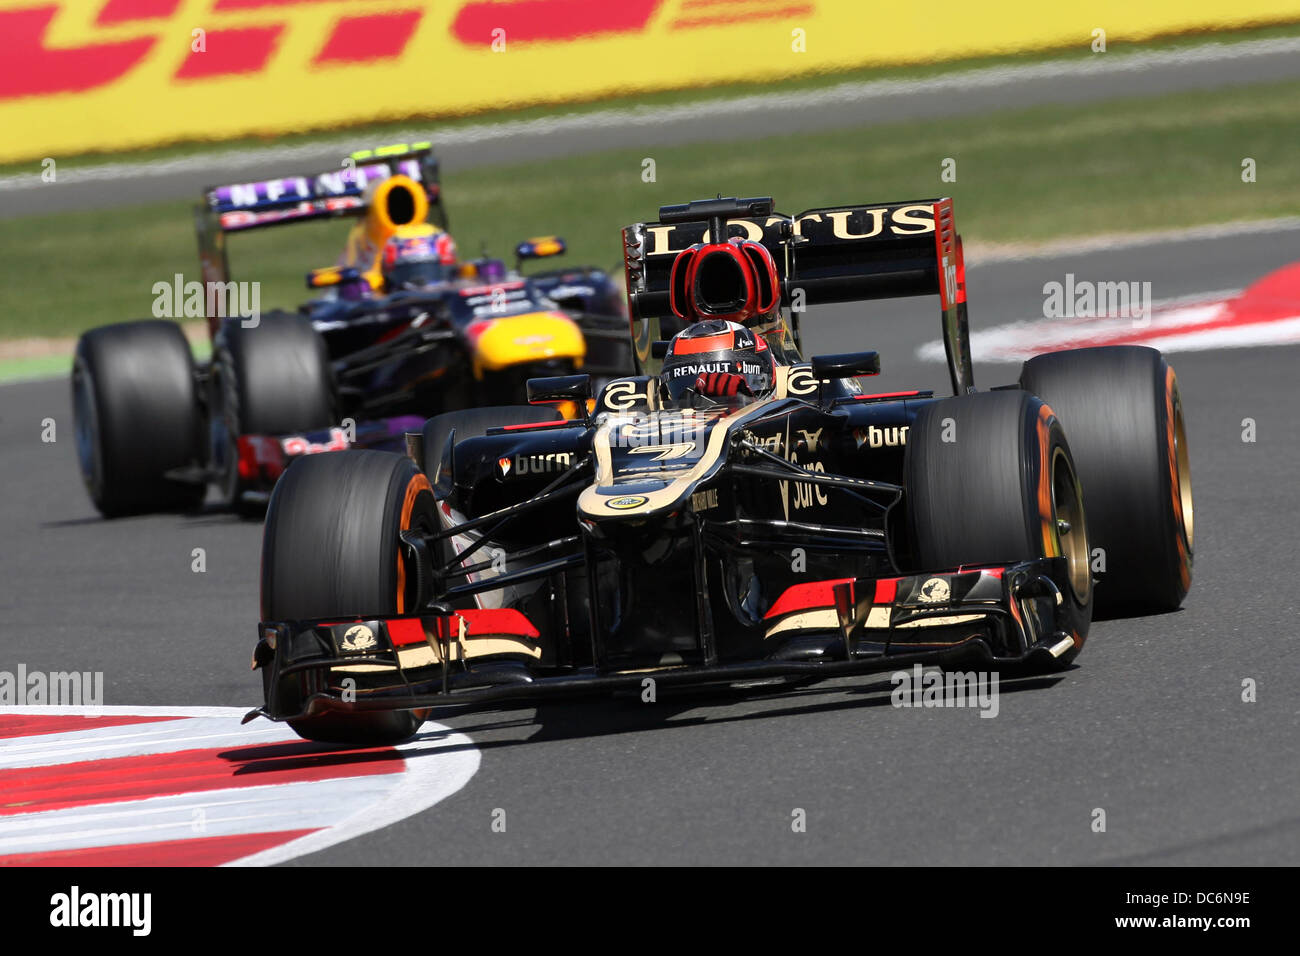 Kimi Raikkonen, Lotus F1 at the 2013 F1 British Grand Prix, Silverstone. Stock Photo